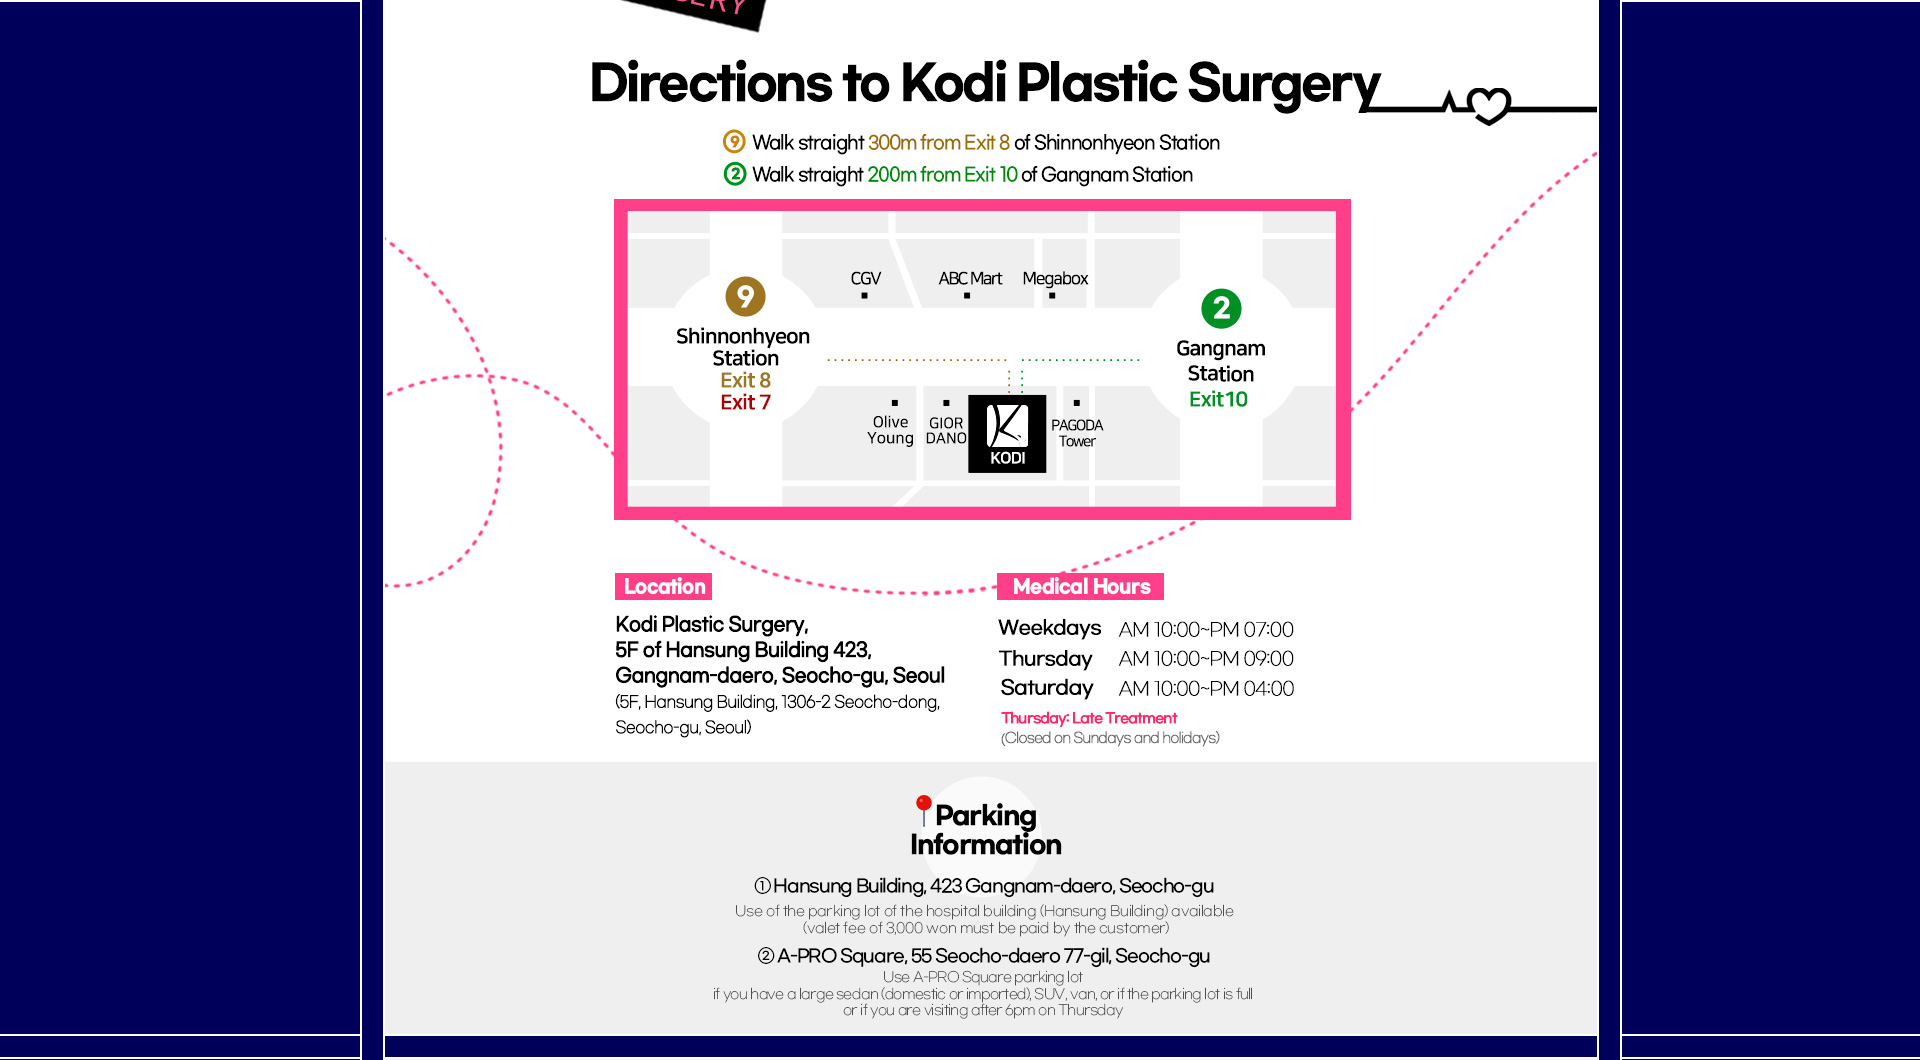 Directions to Kodi Plastic Surgery